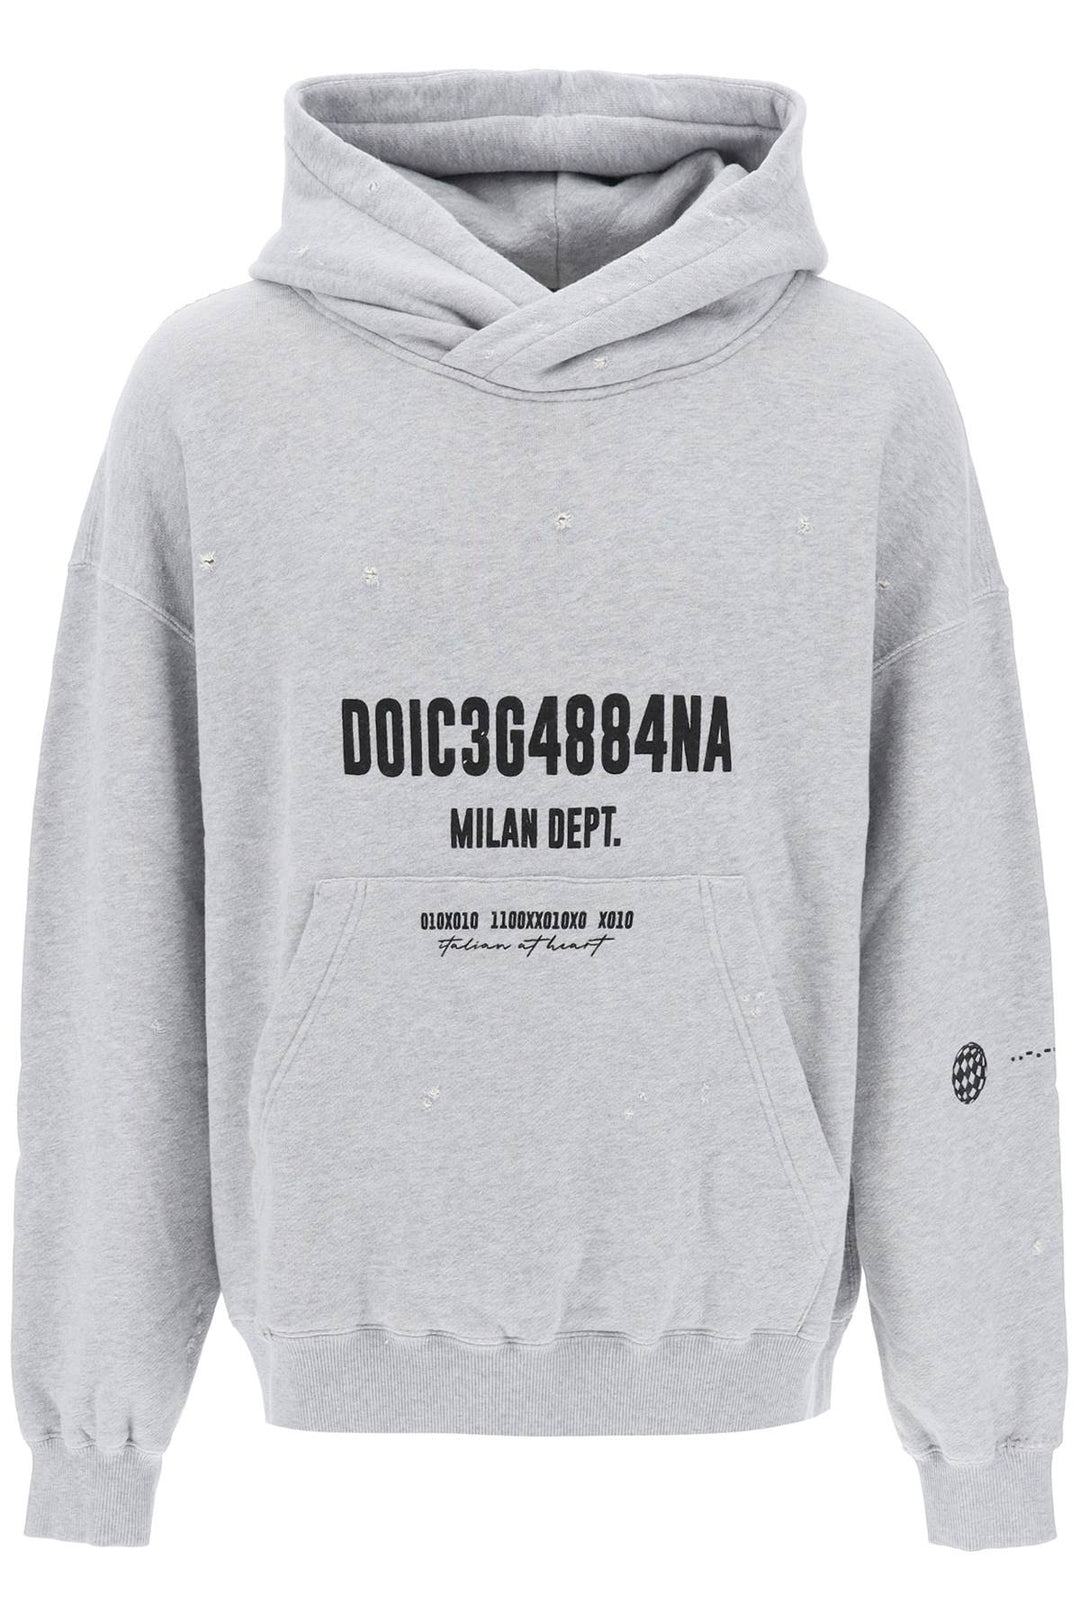 Dolce & gabbana distressed-effect hoodie-0